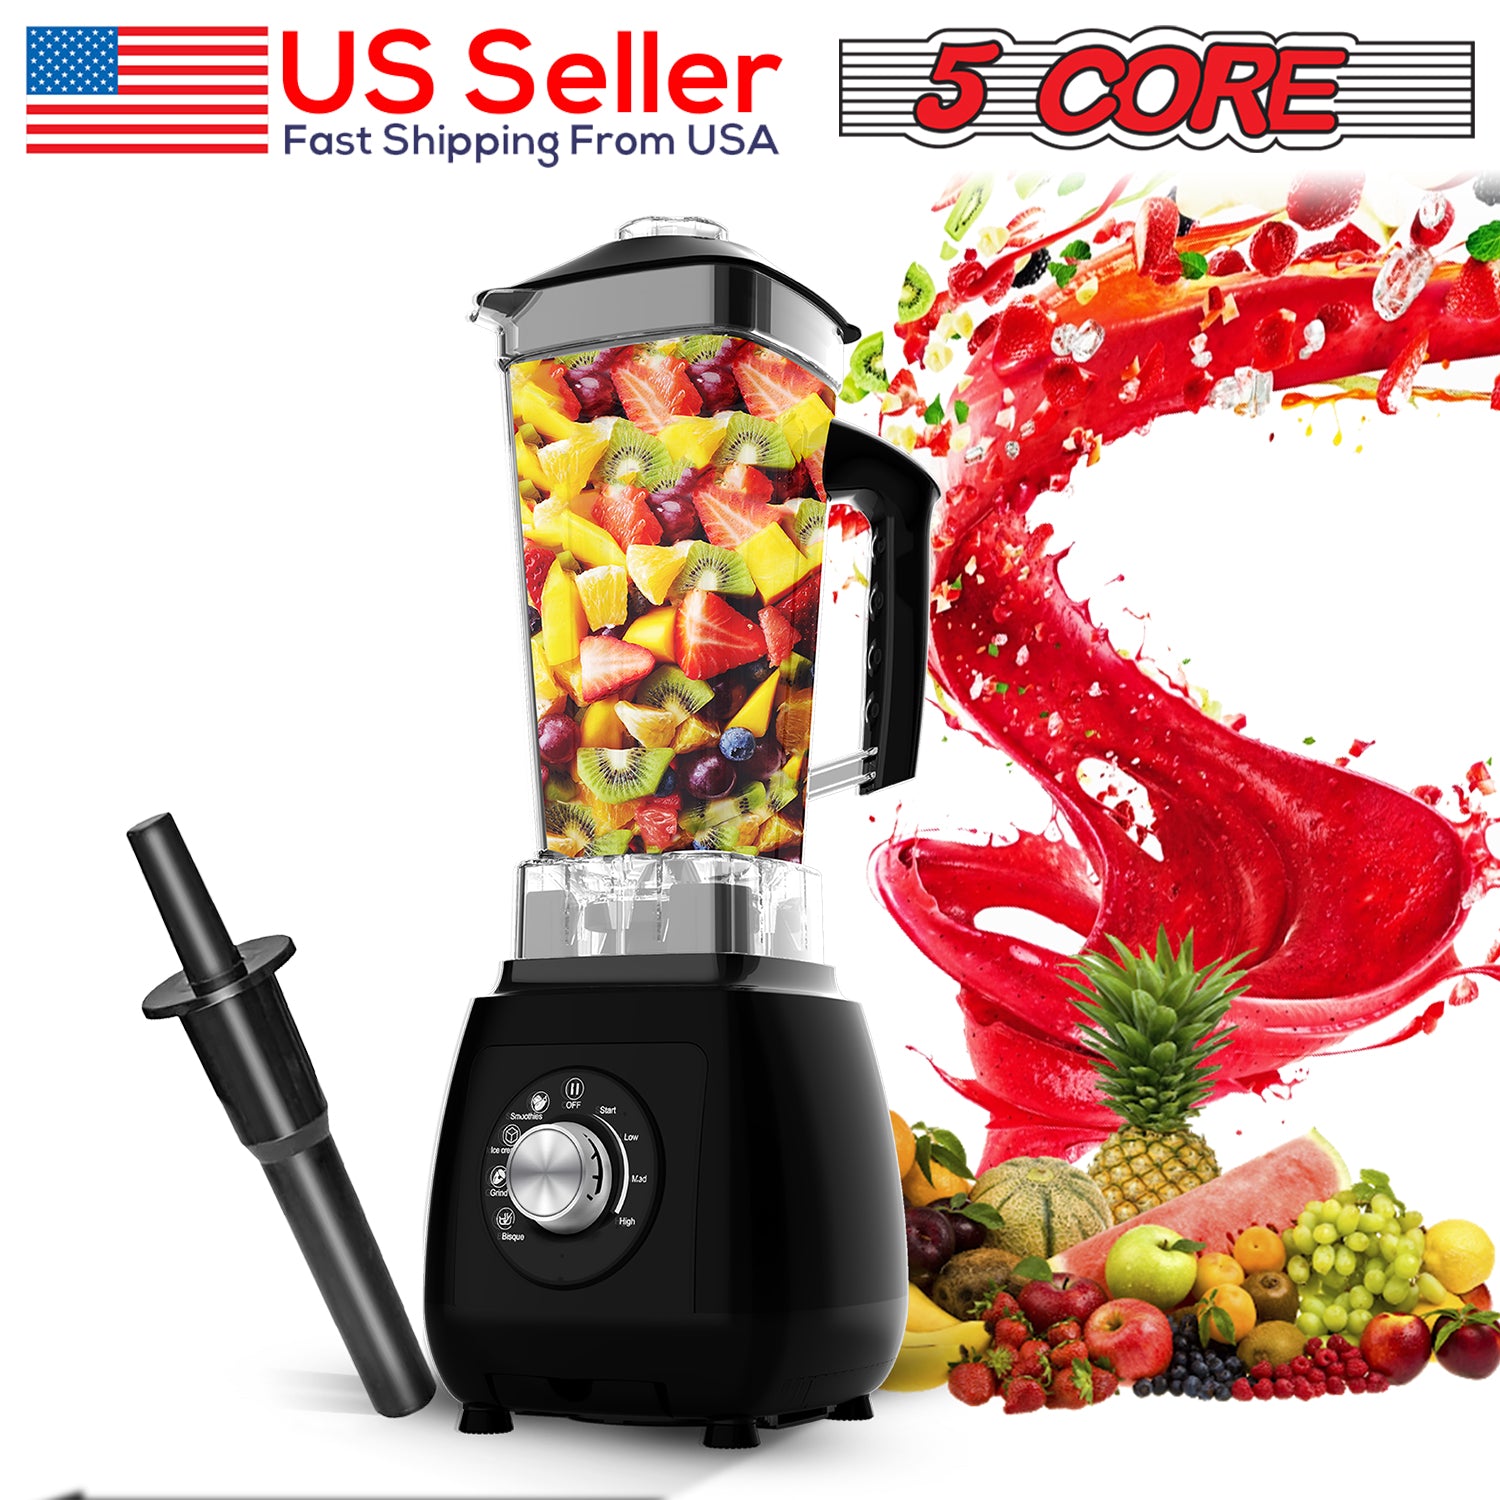 5 Core Juicer Blender Machines 2000W • High-Speed Countertop Shake Smoothie Maker • w 68oz Jar